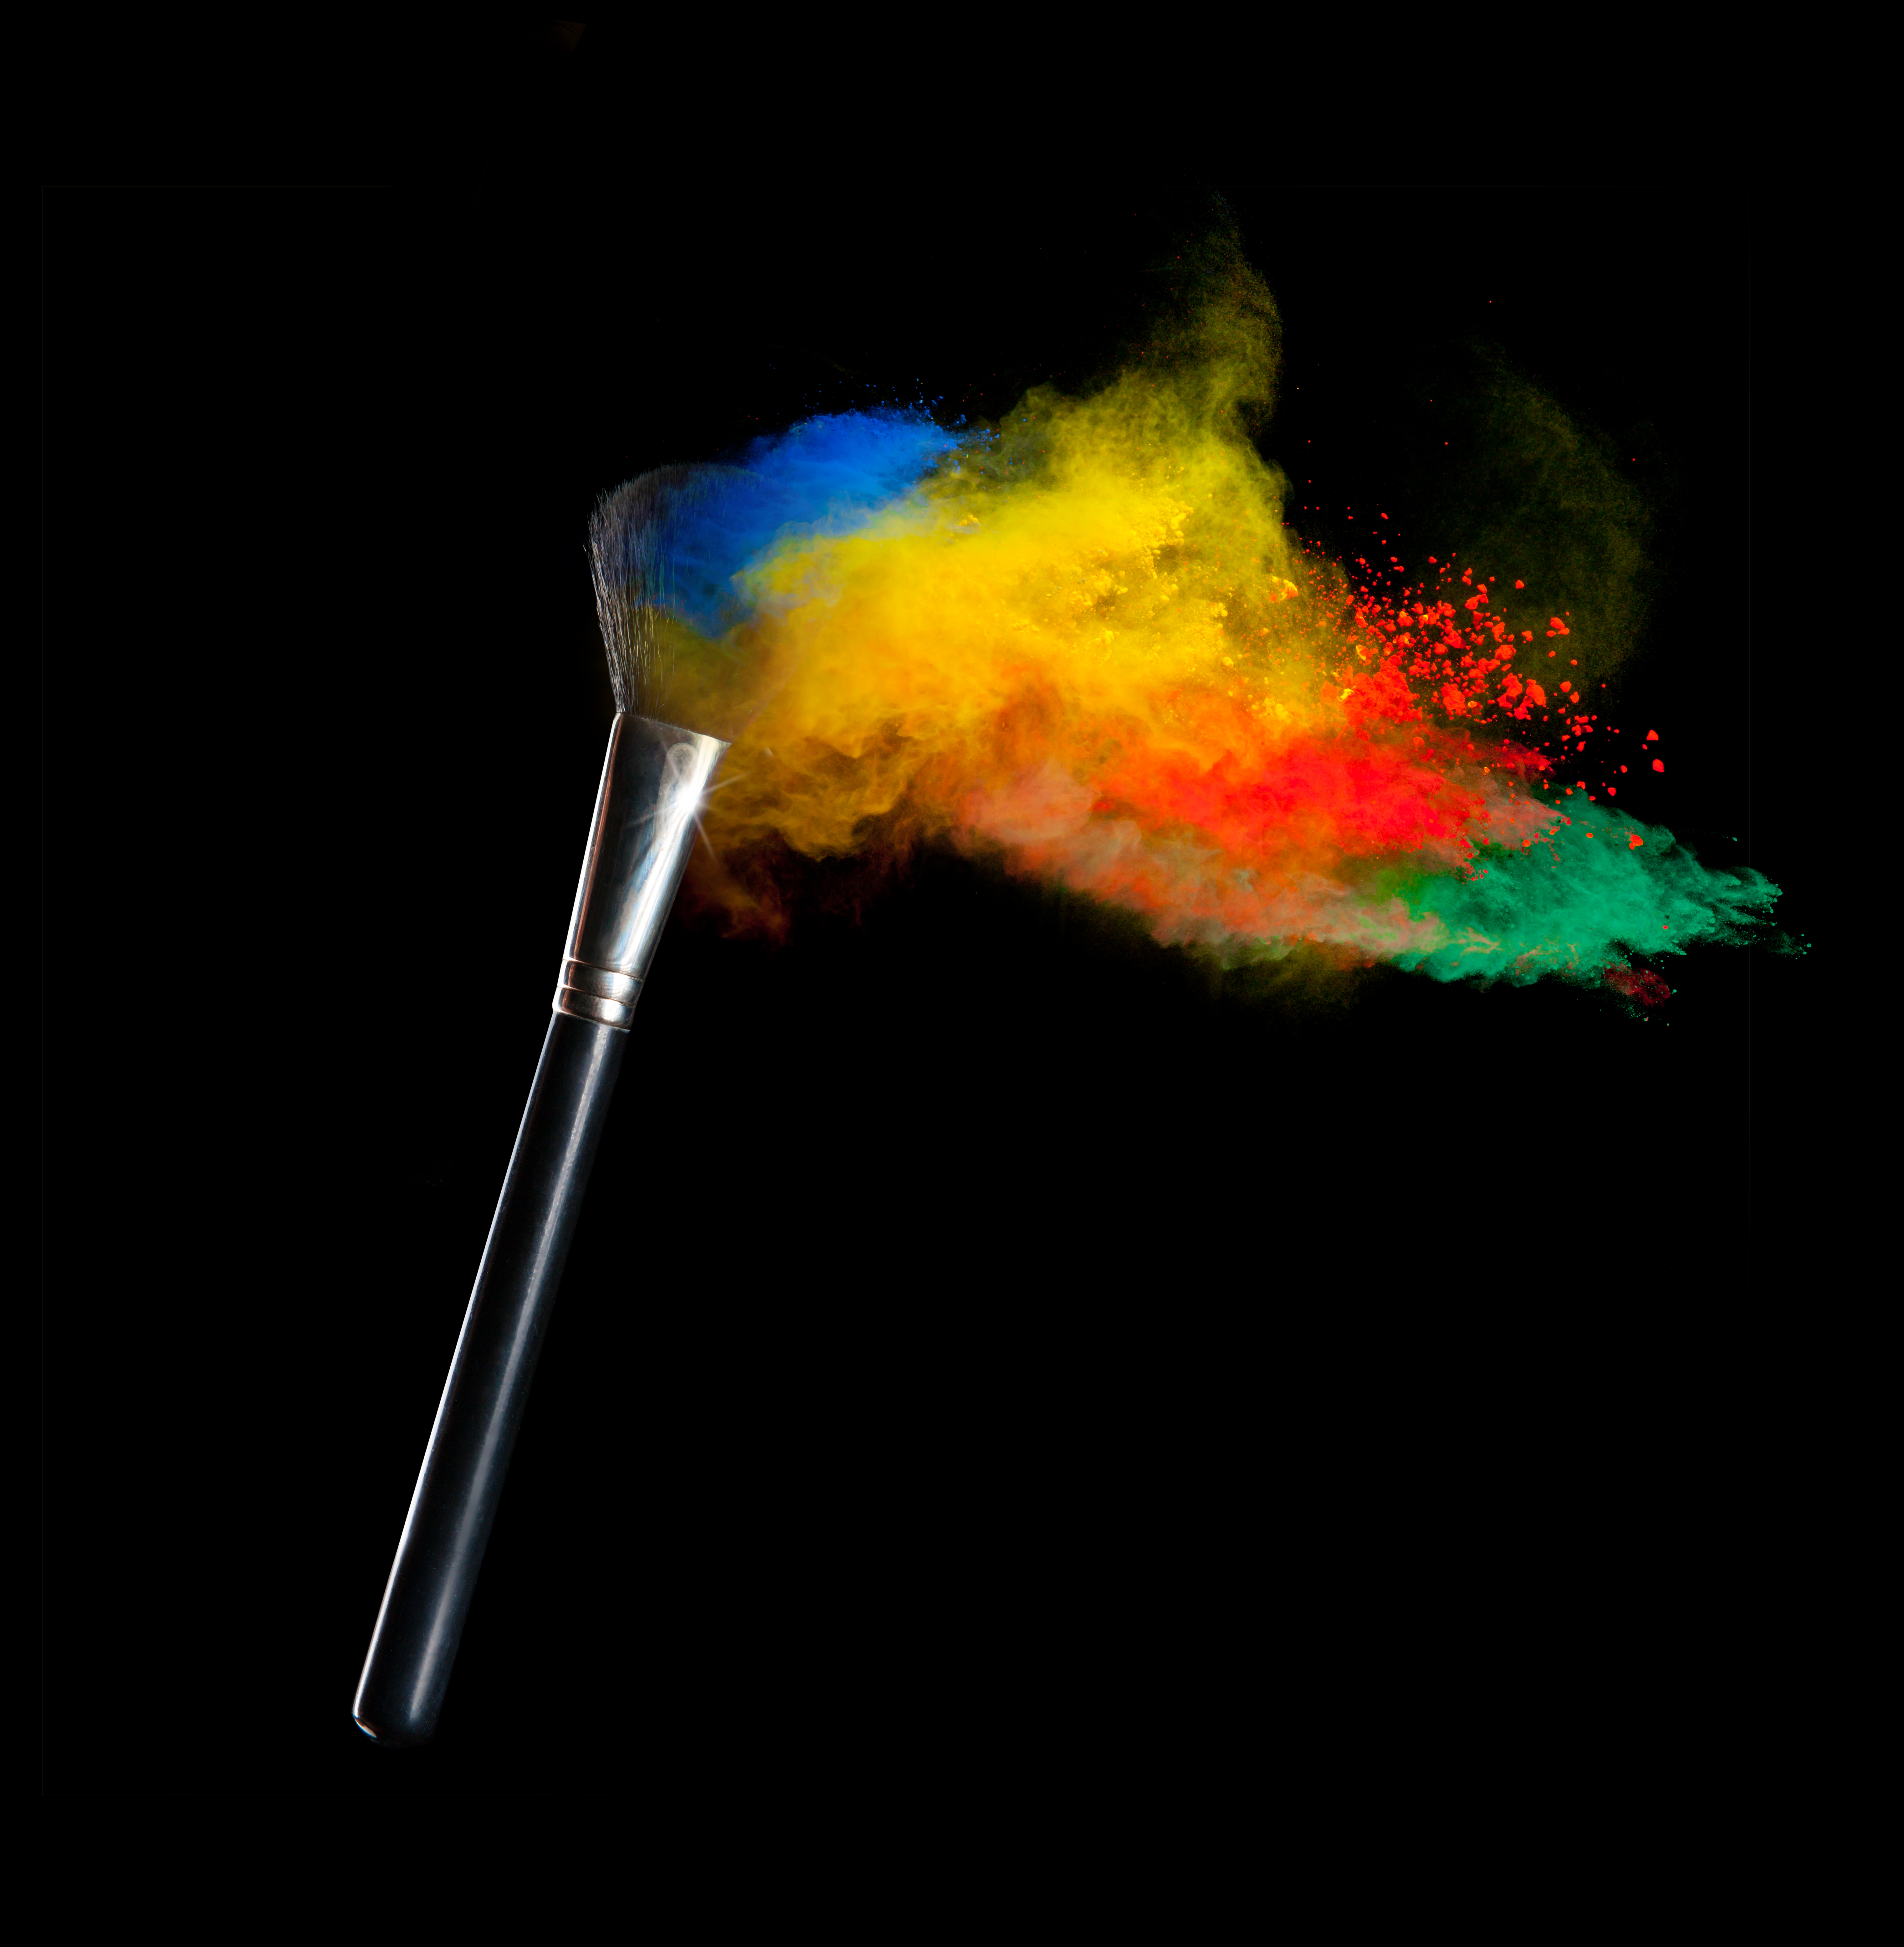 General 6084x6222 powder explosion powder colorful brush closeup low light simple background digital art